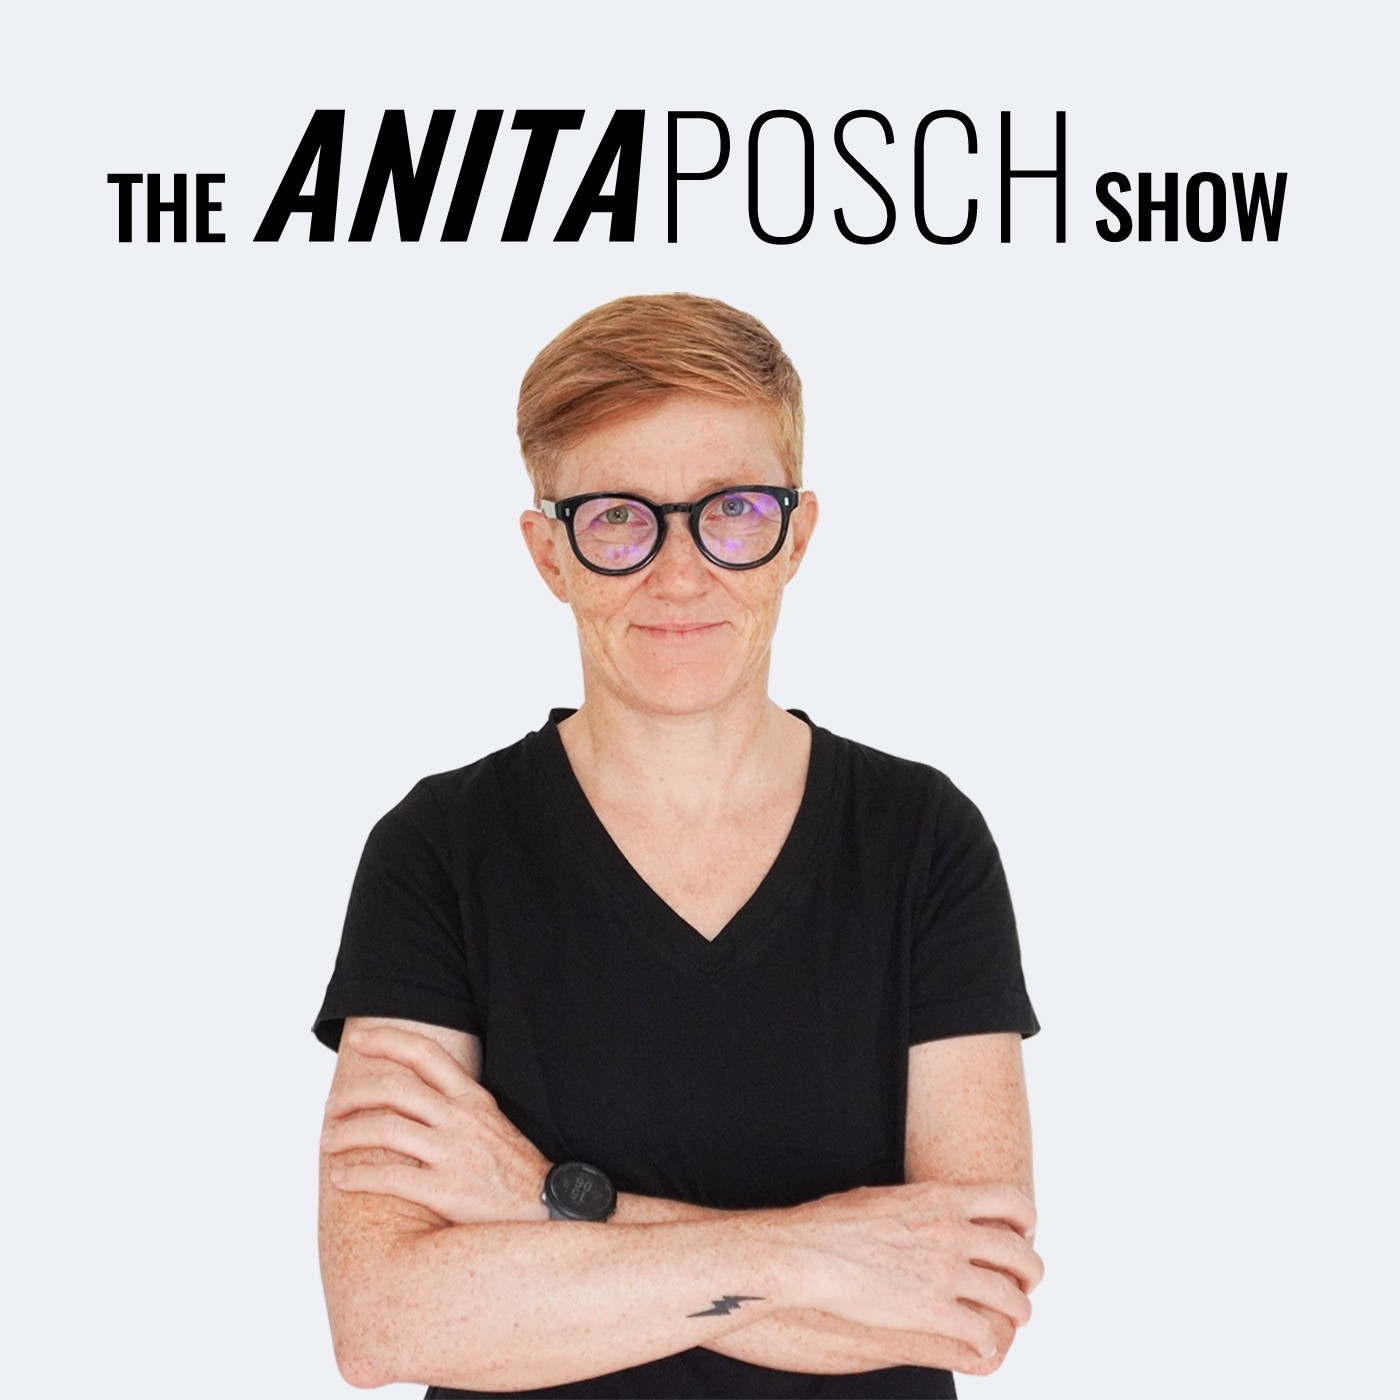 Advocating for Human Rights through Bitcoin - Anita Posch